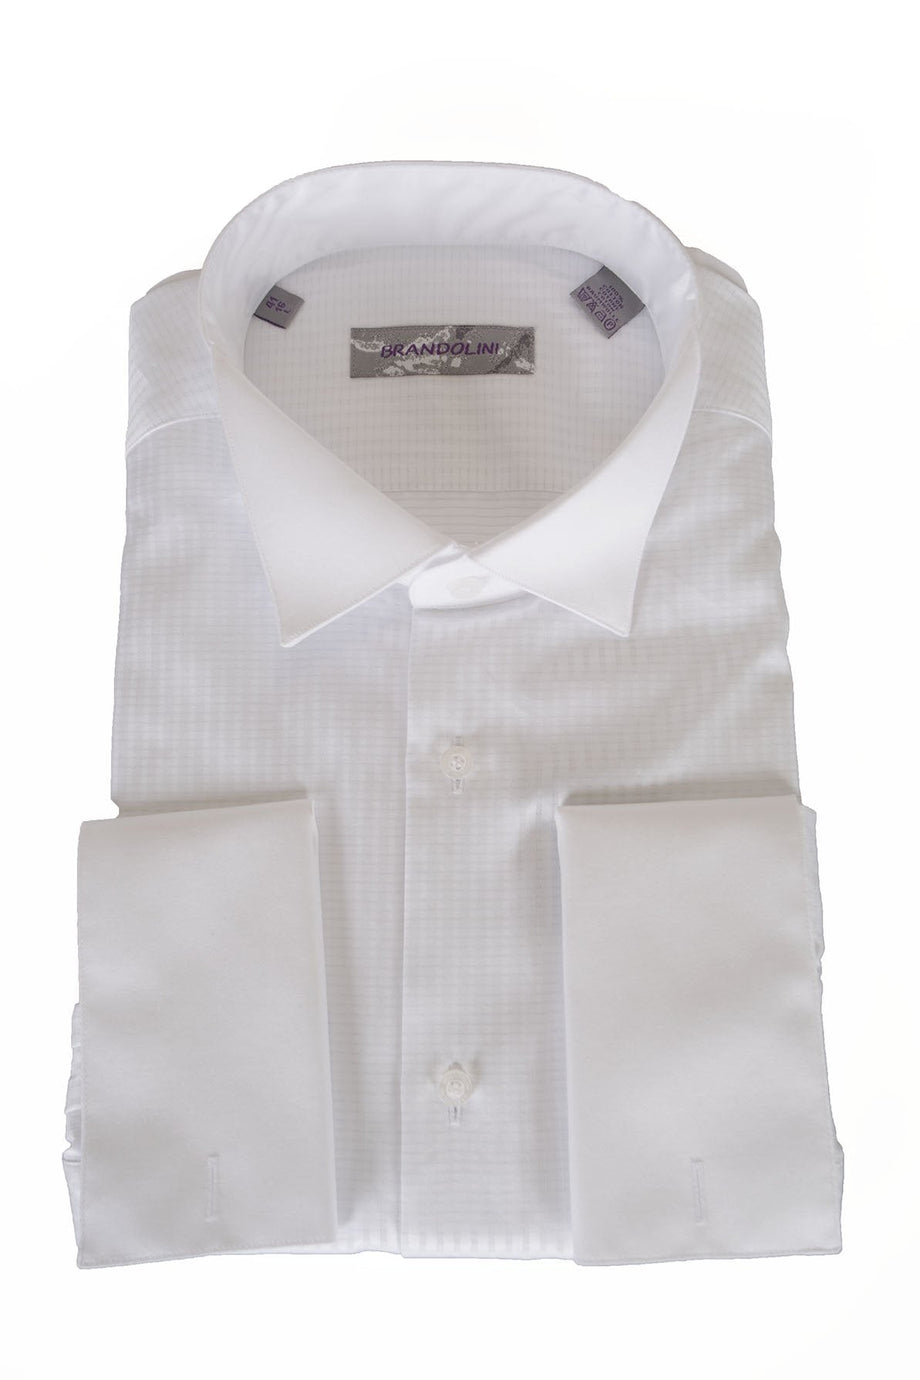 Brandolini "Alberto" White Wingtip Tuxedo Shirt